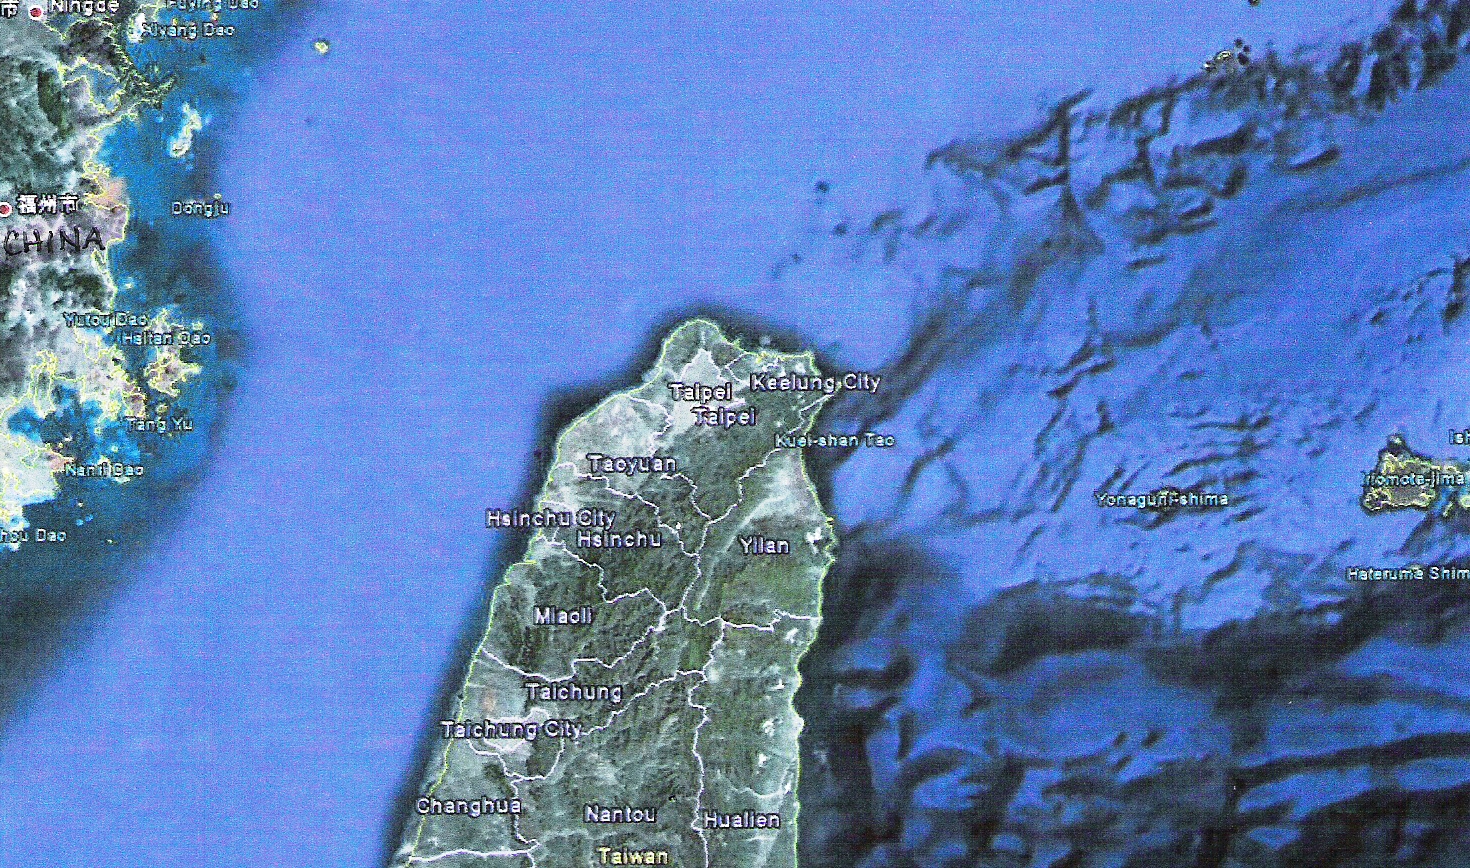 Yonaguni Map